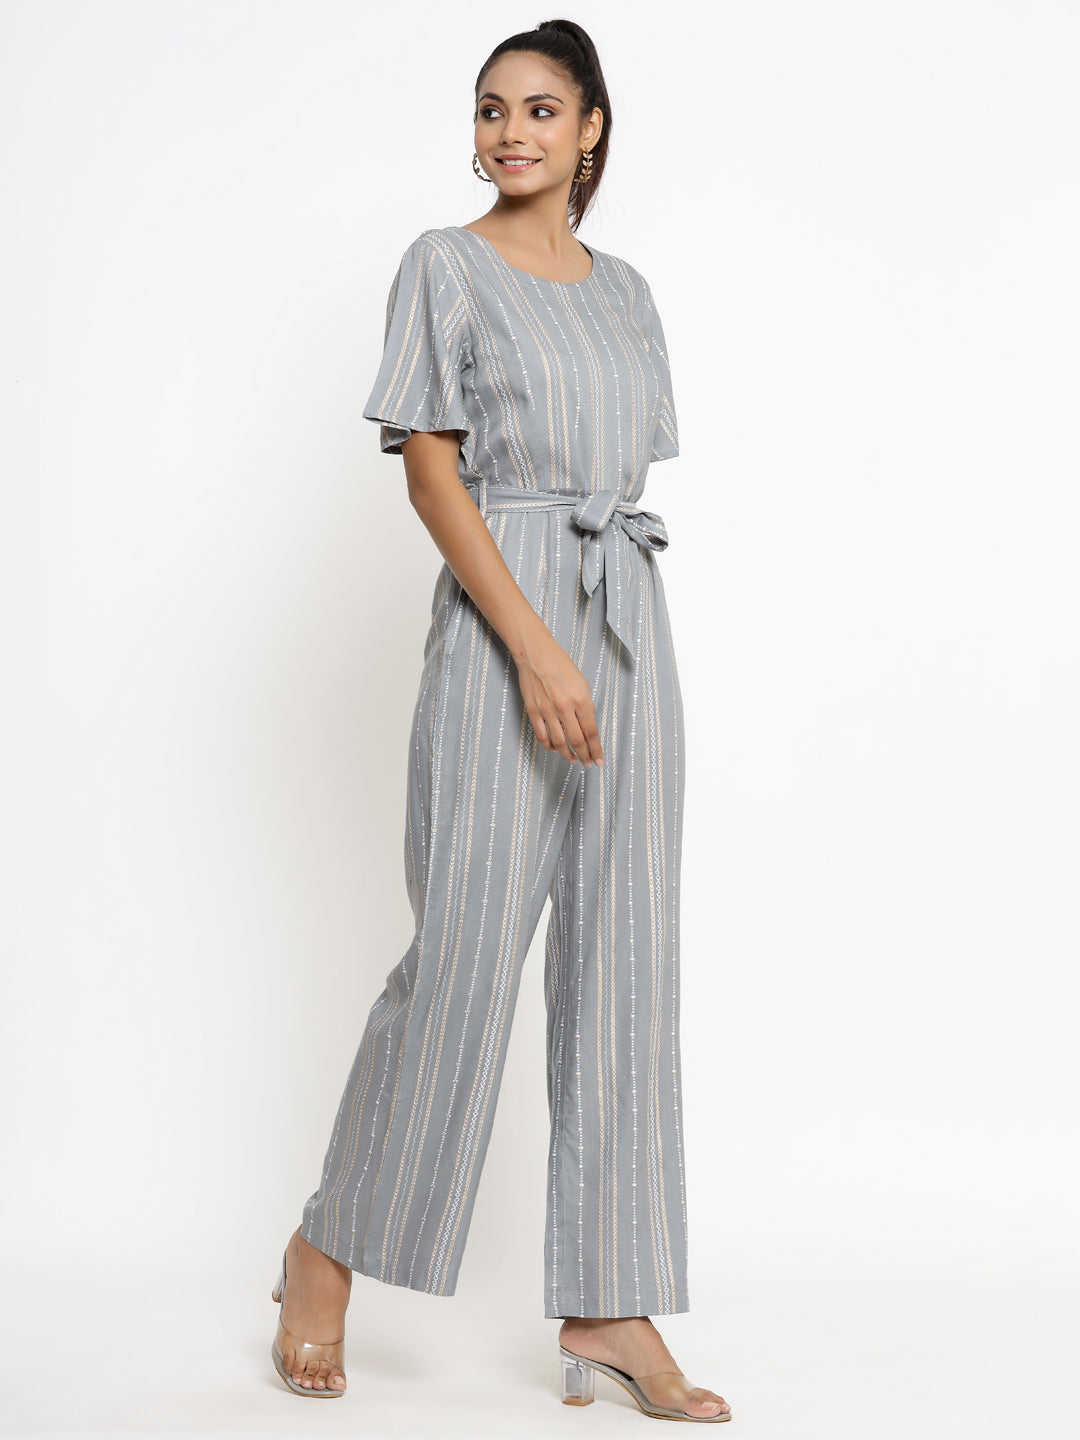 Women's Self Desgin Rayon Fabric Jumpsuit Grey Color - Kipek